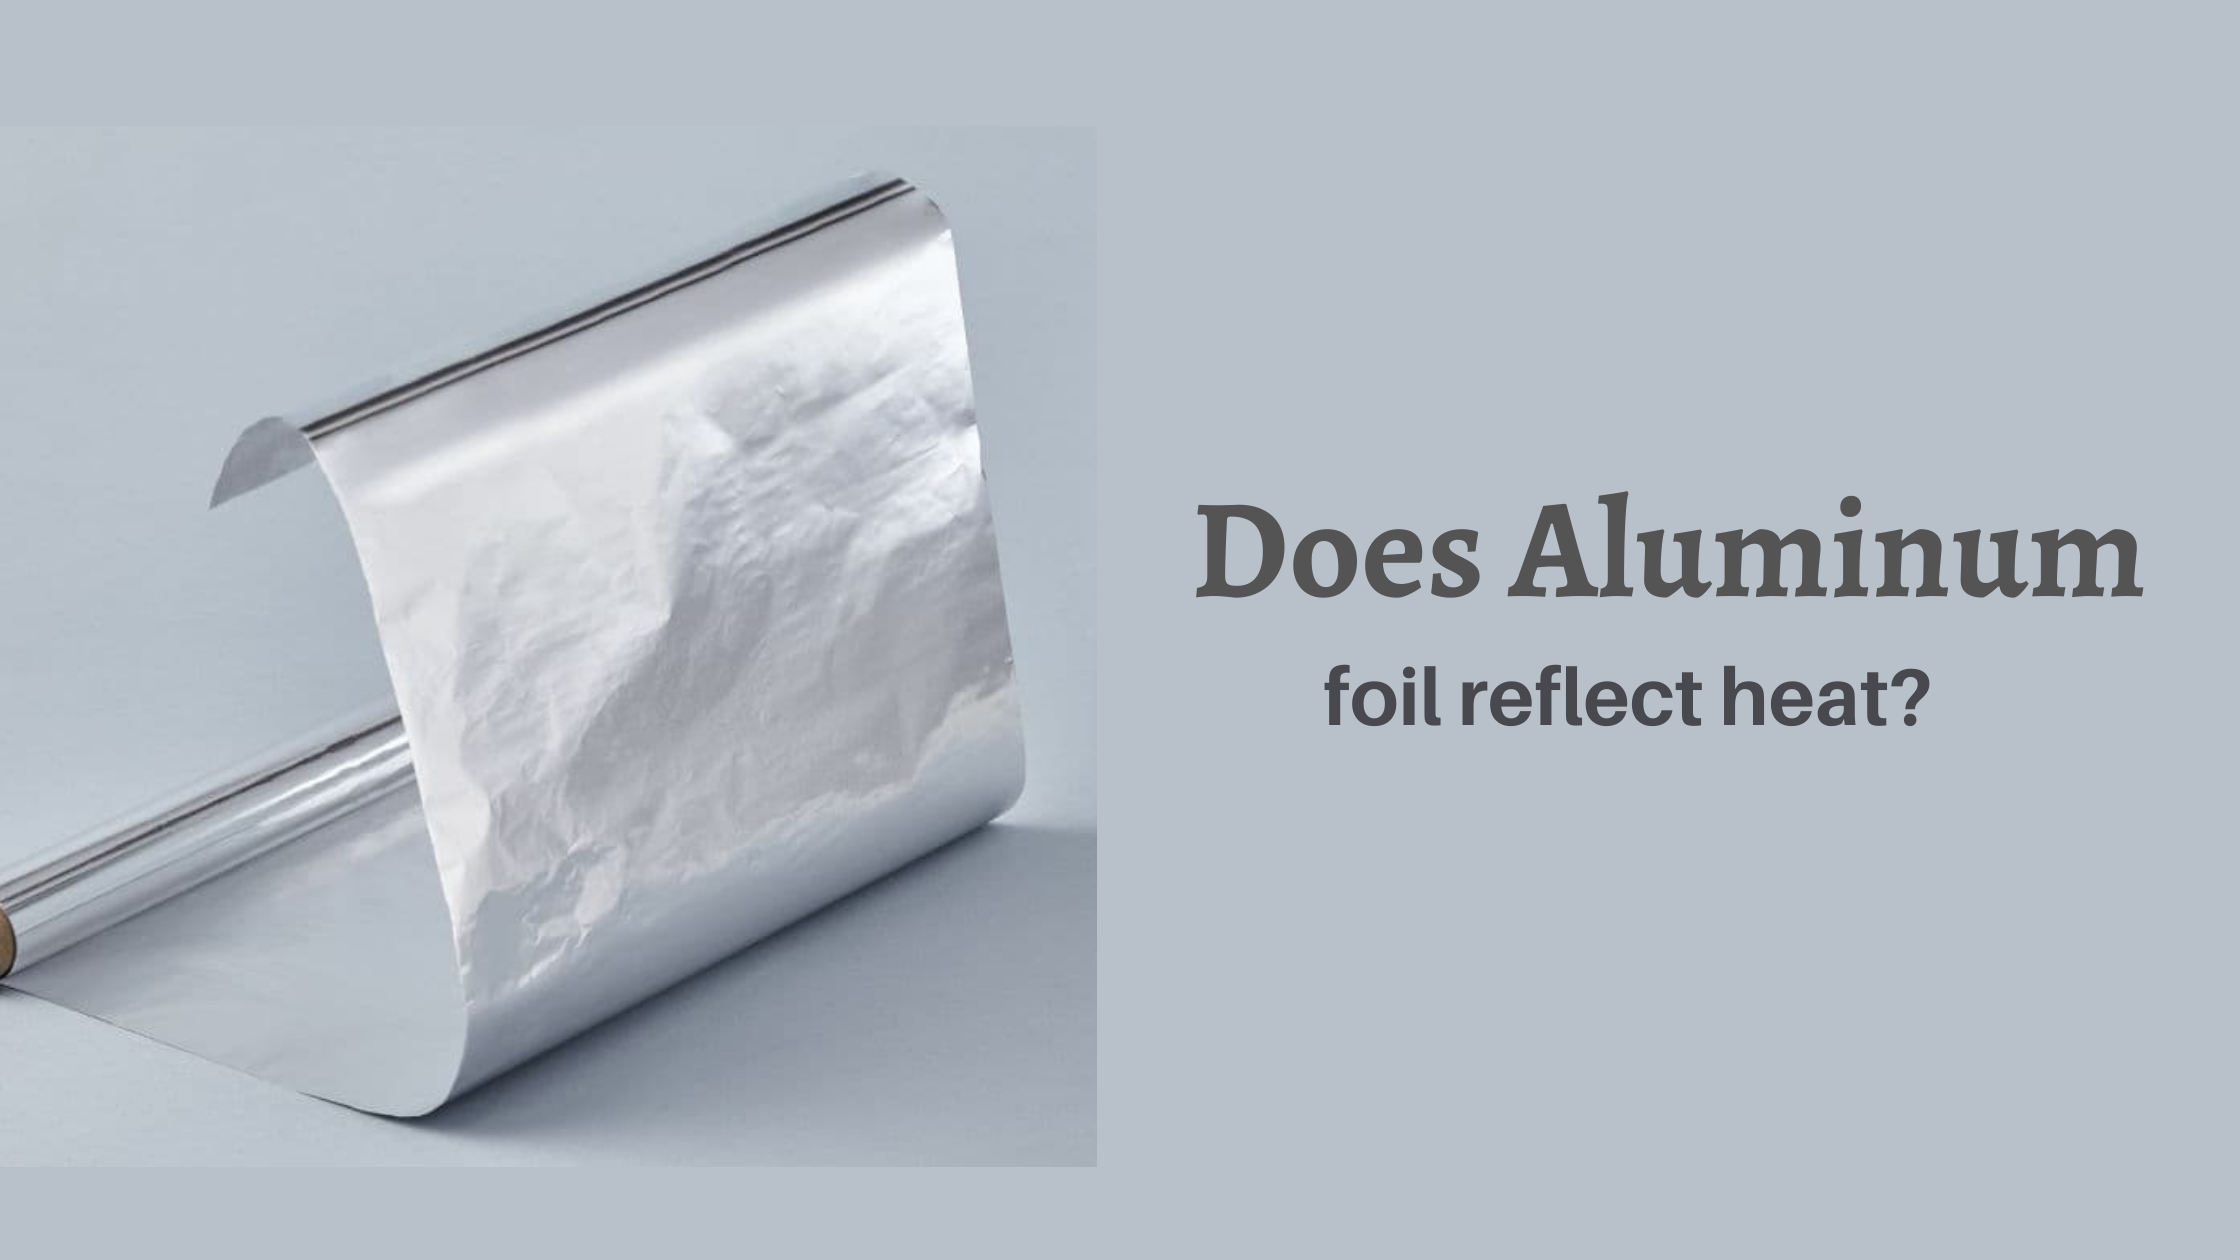 Does aluminum foil reflect heat?